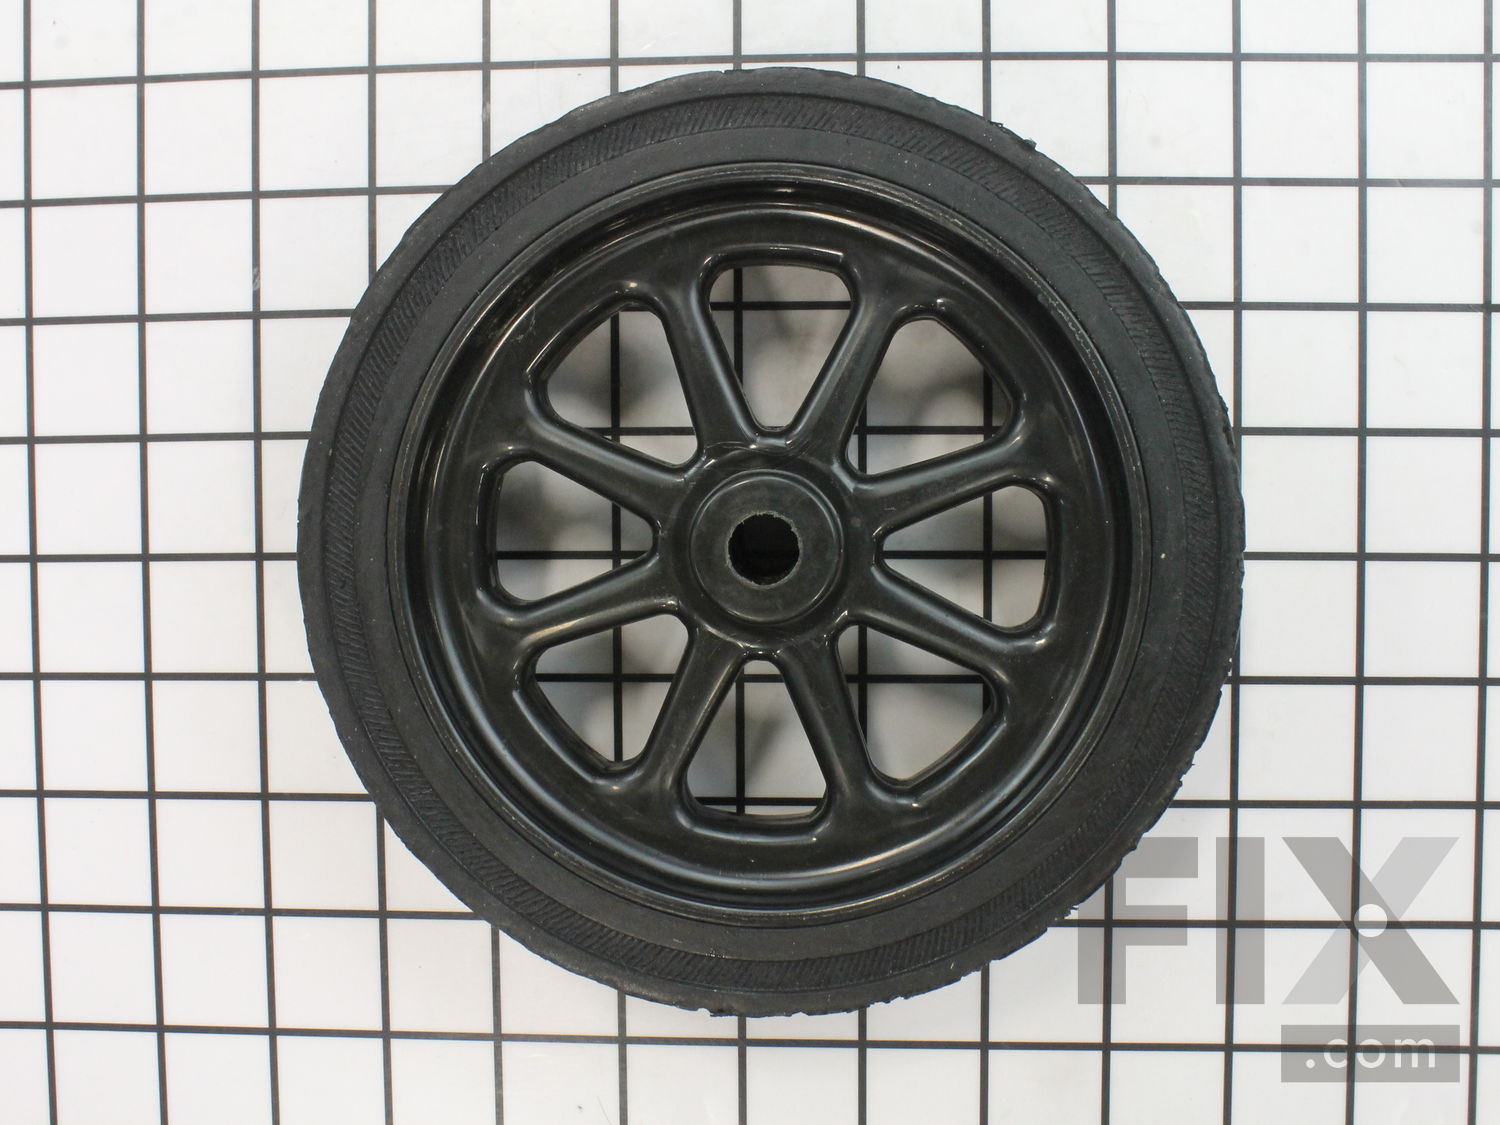 Craftsman E102191 Air Compressor Wheel 